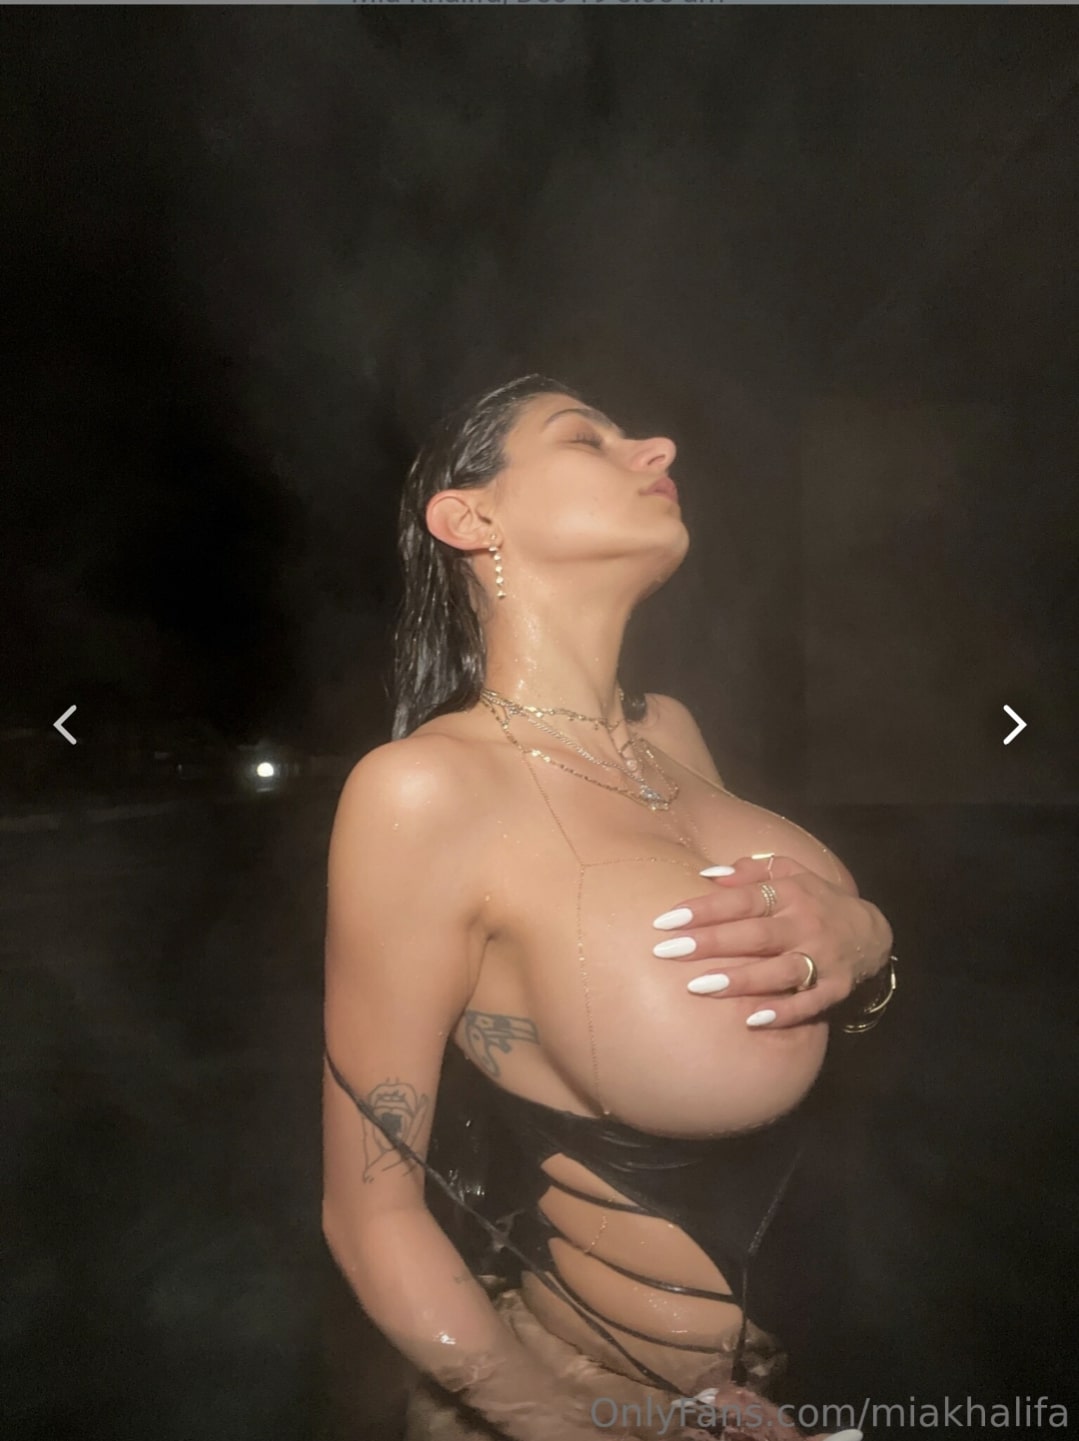 mia khalifa shower full topless tits onlyfans livestream video 8273d54